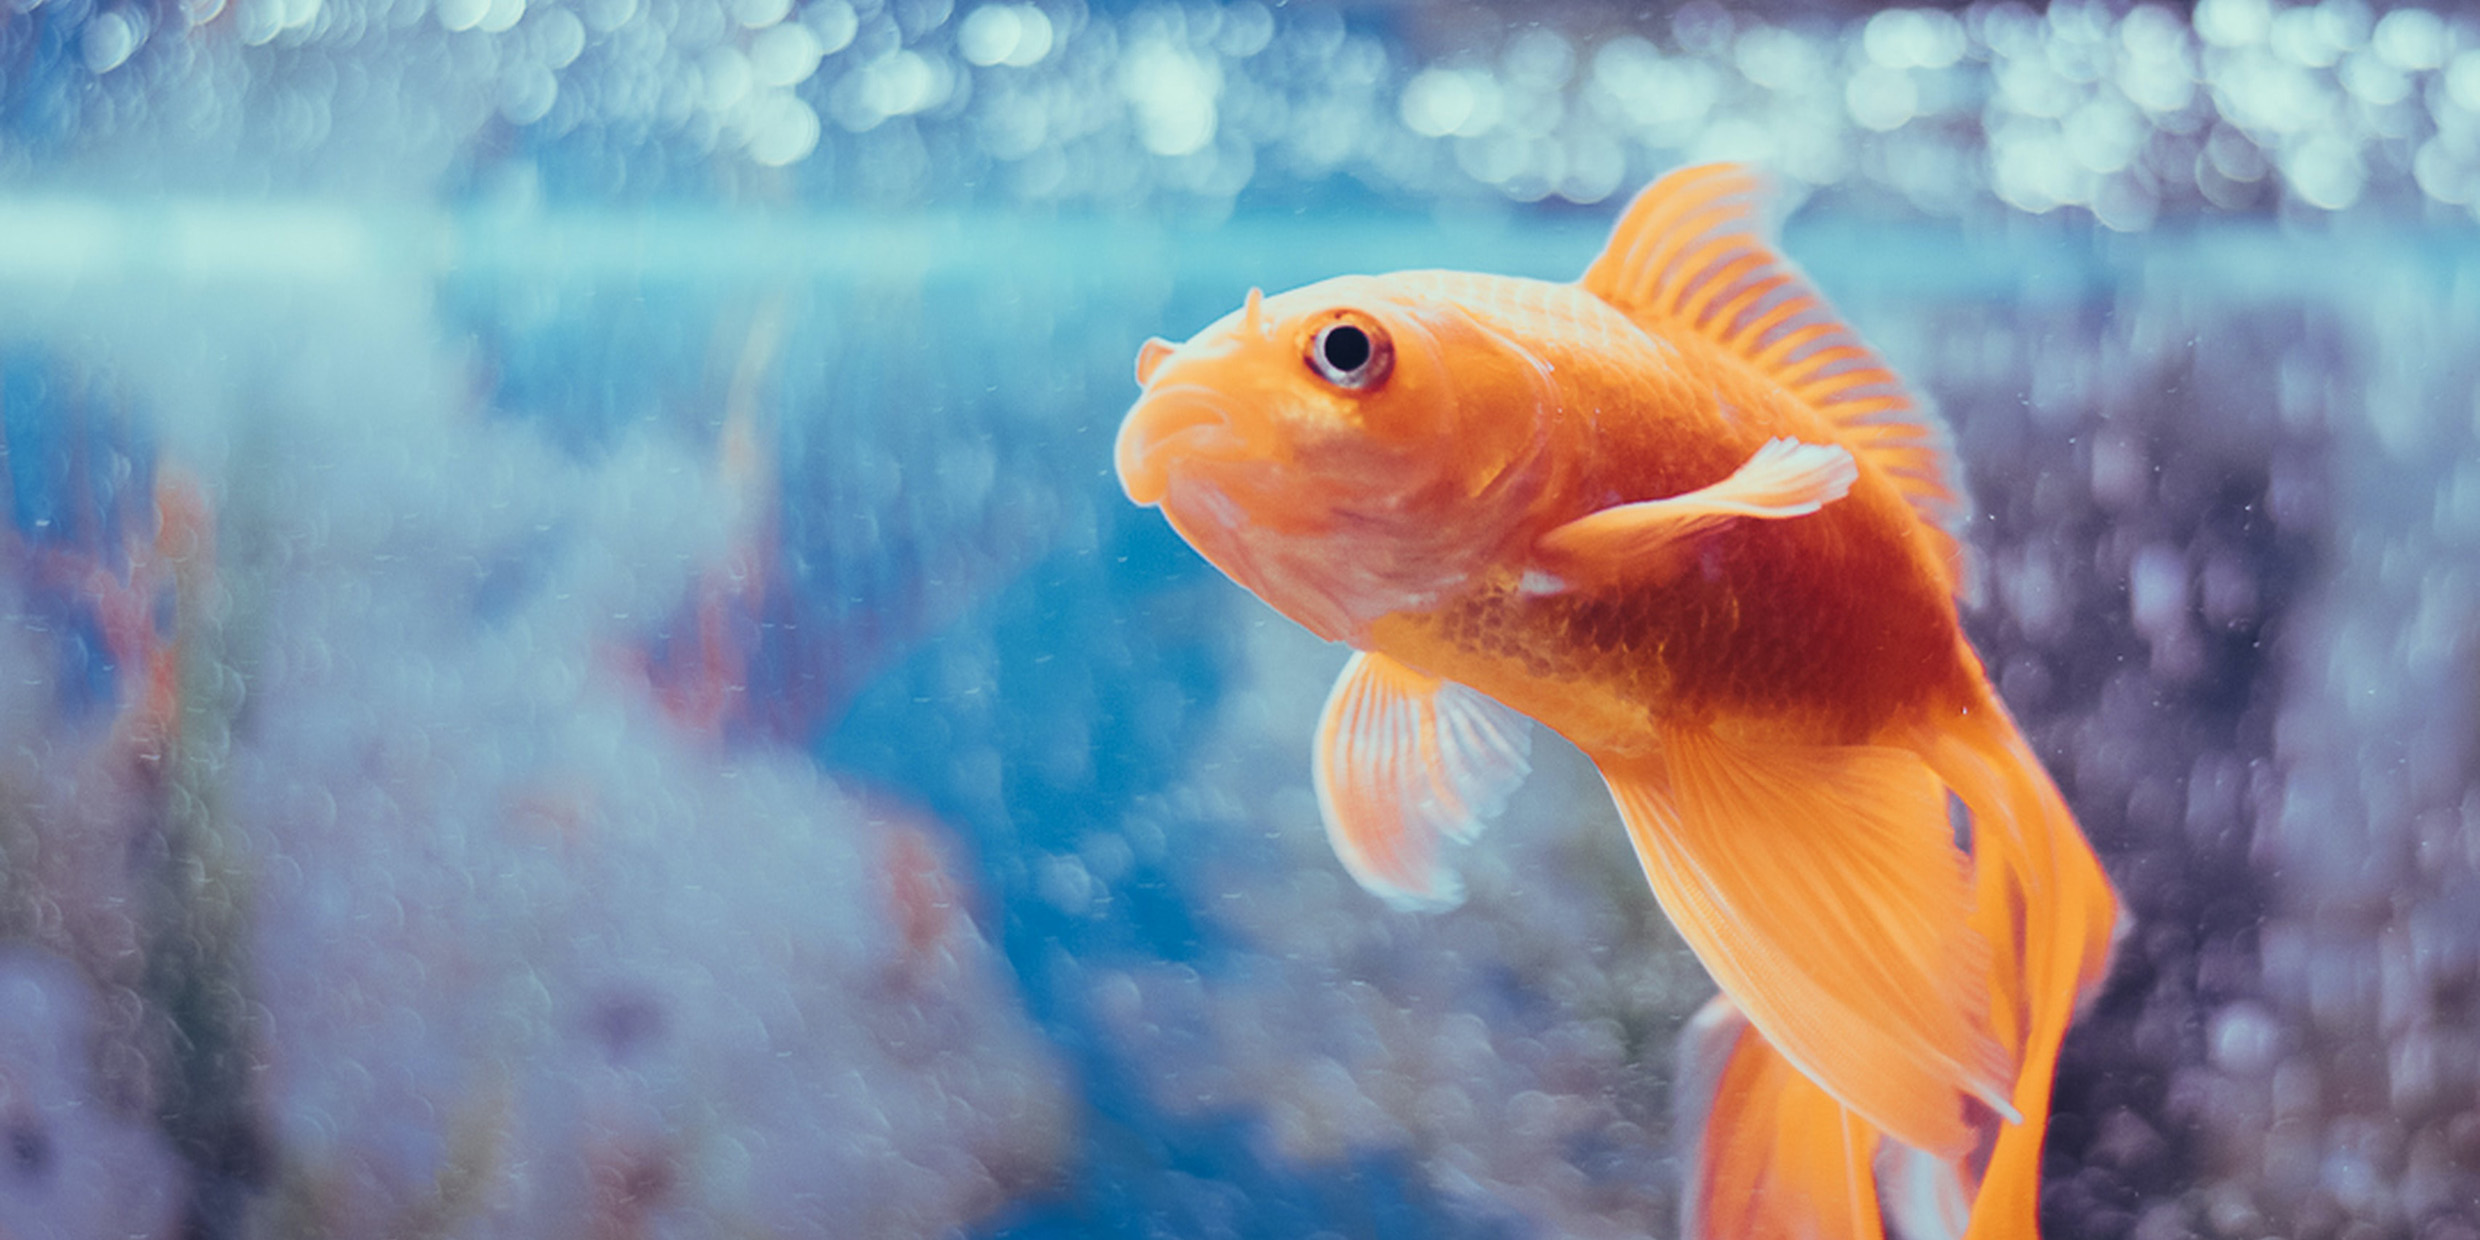 Image of a goldfish inside a fish tank